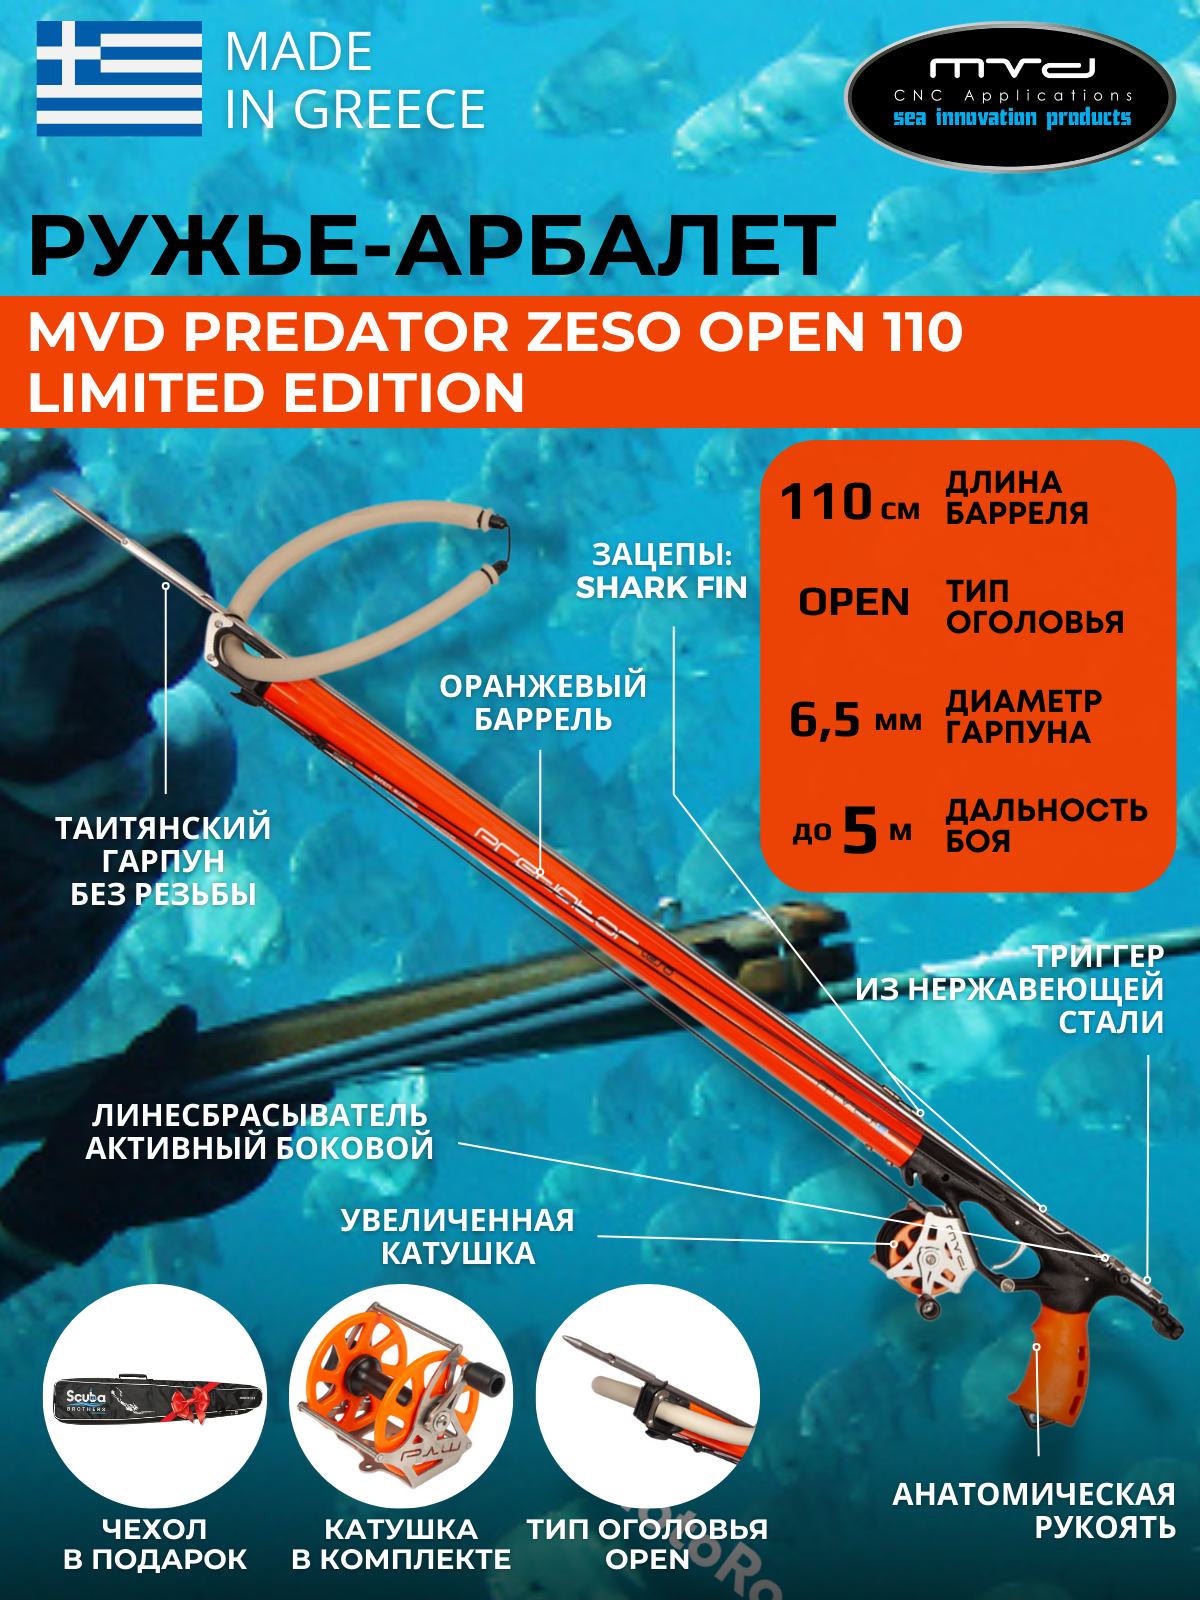 Ружье-арбалет MVD PREDATOR ZESO OPEN 120 см Limited Edition с катушкой полный комплект